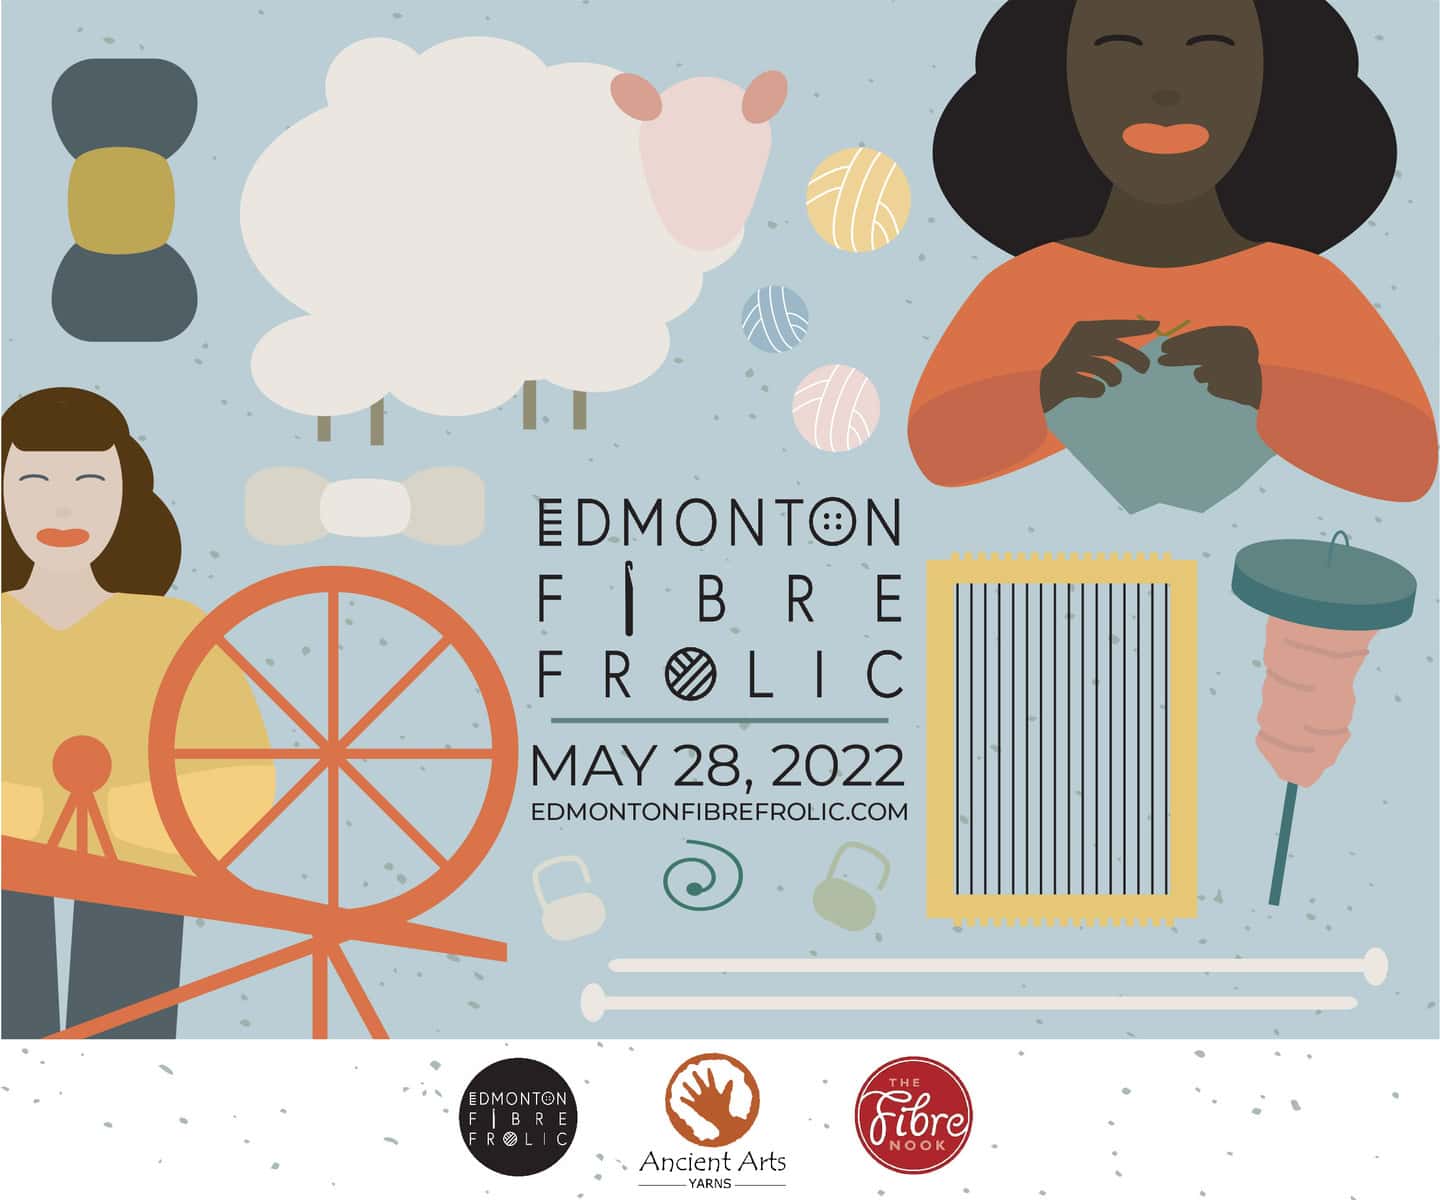 Ad description: Edmonton Fibre Frolic, with craft-related illustrations